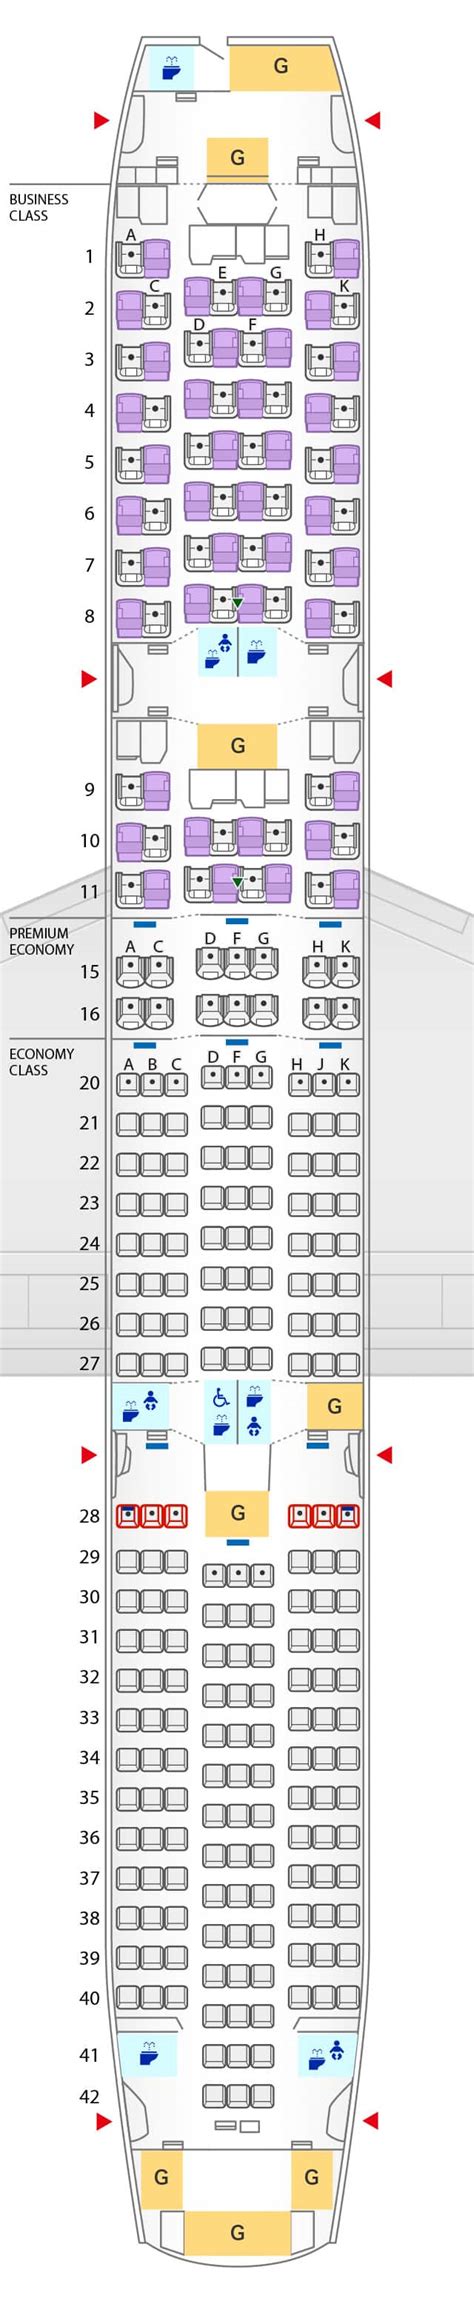 seat map boeing 787-9